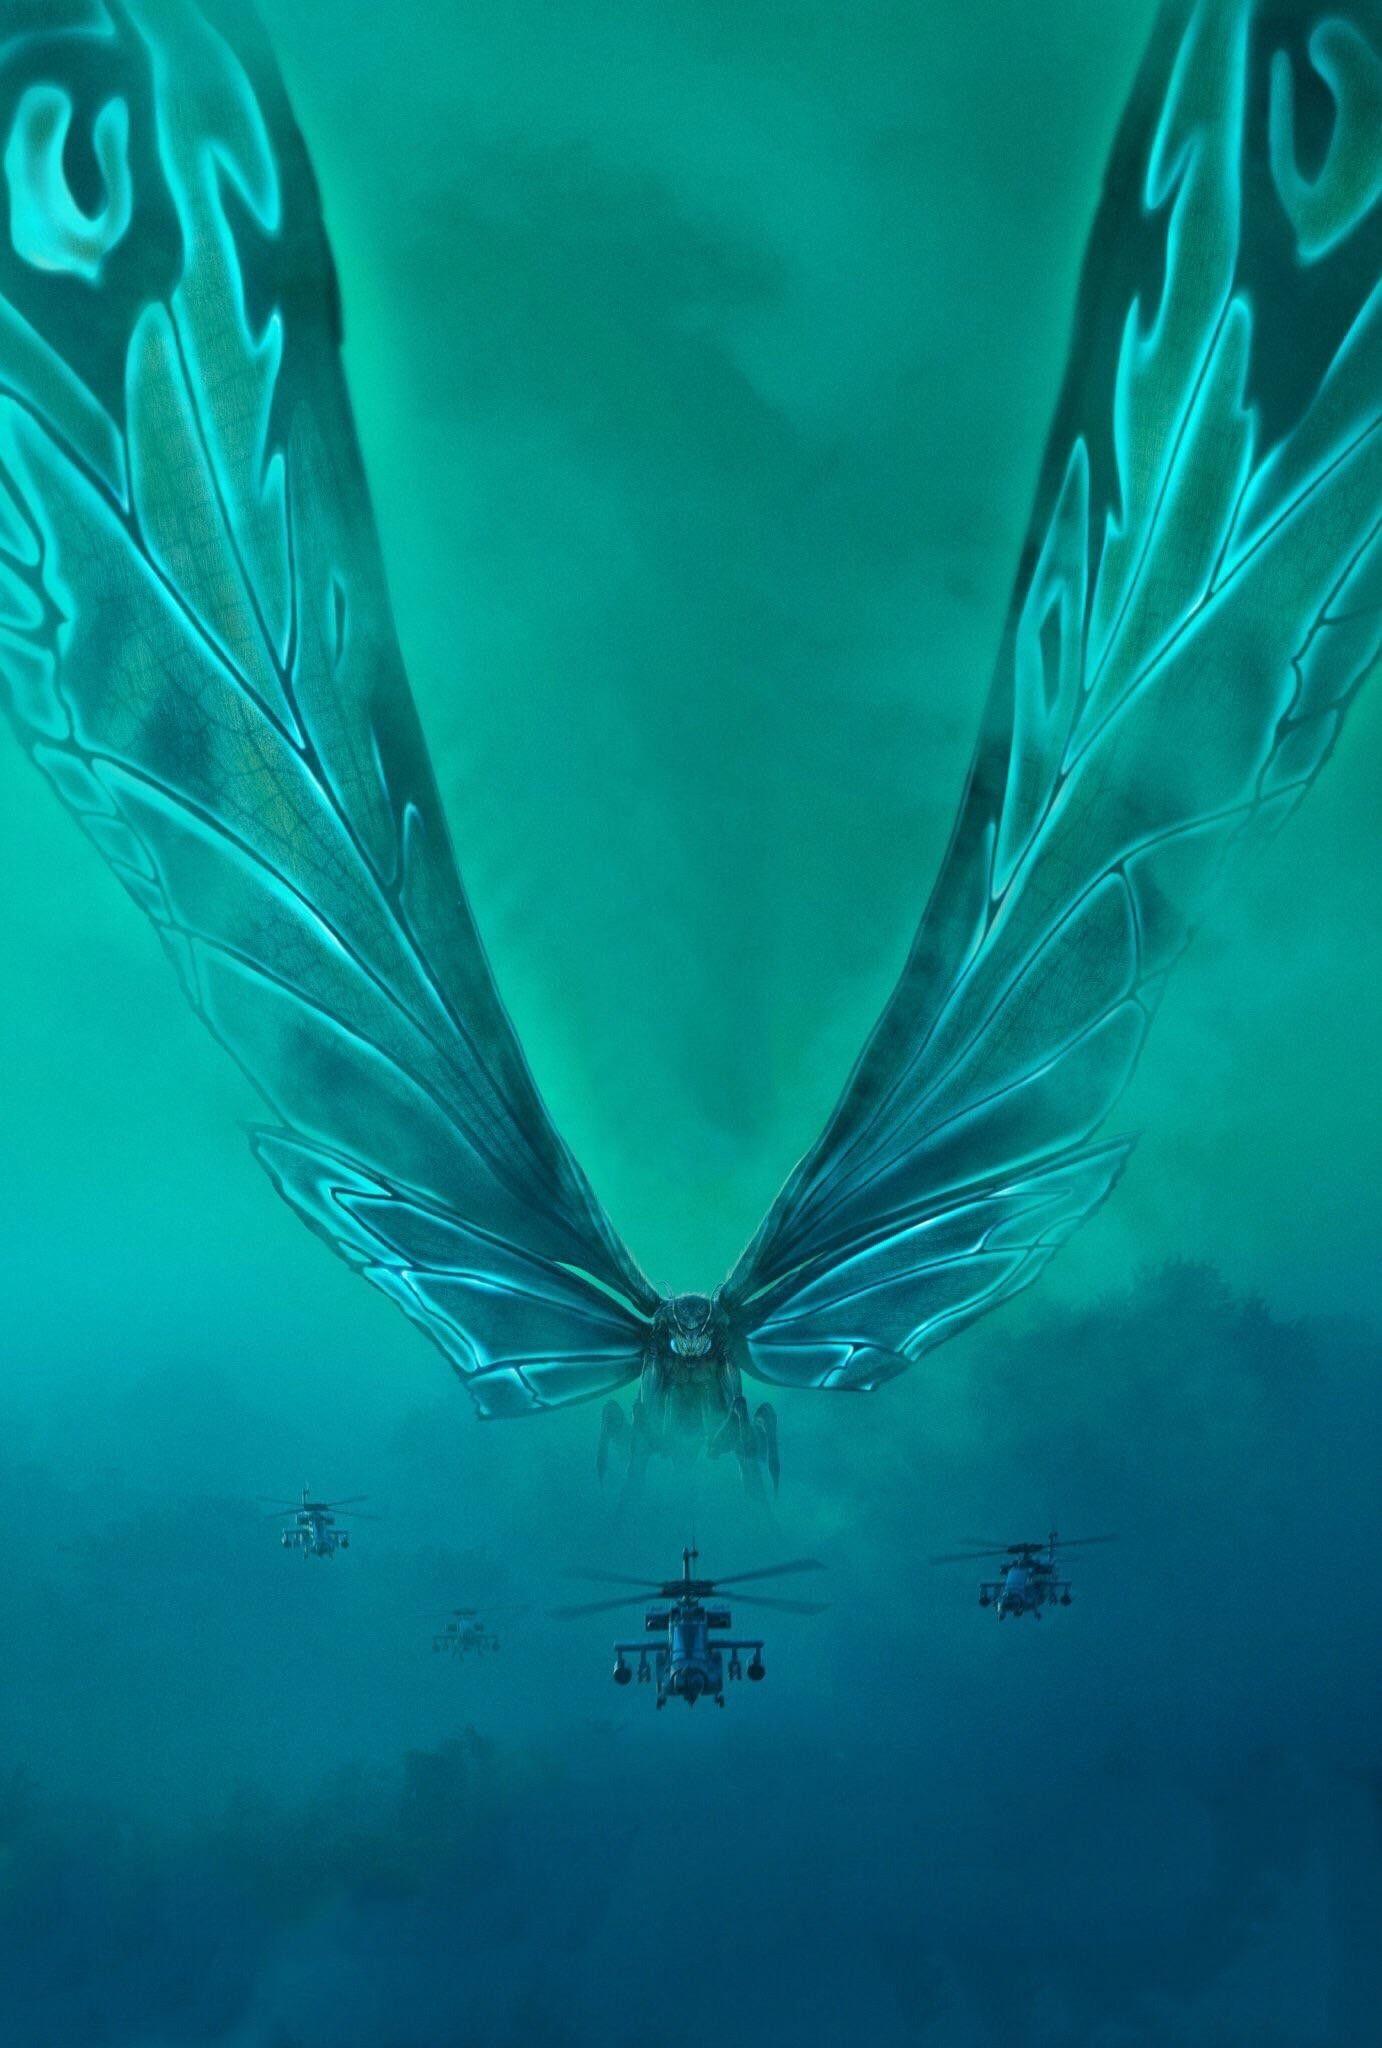 Official Mothra 2019 Poster Textless. Godzilla wallpaper, Godzilla, Kaiju monsters